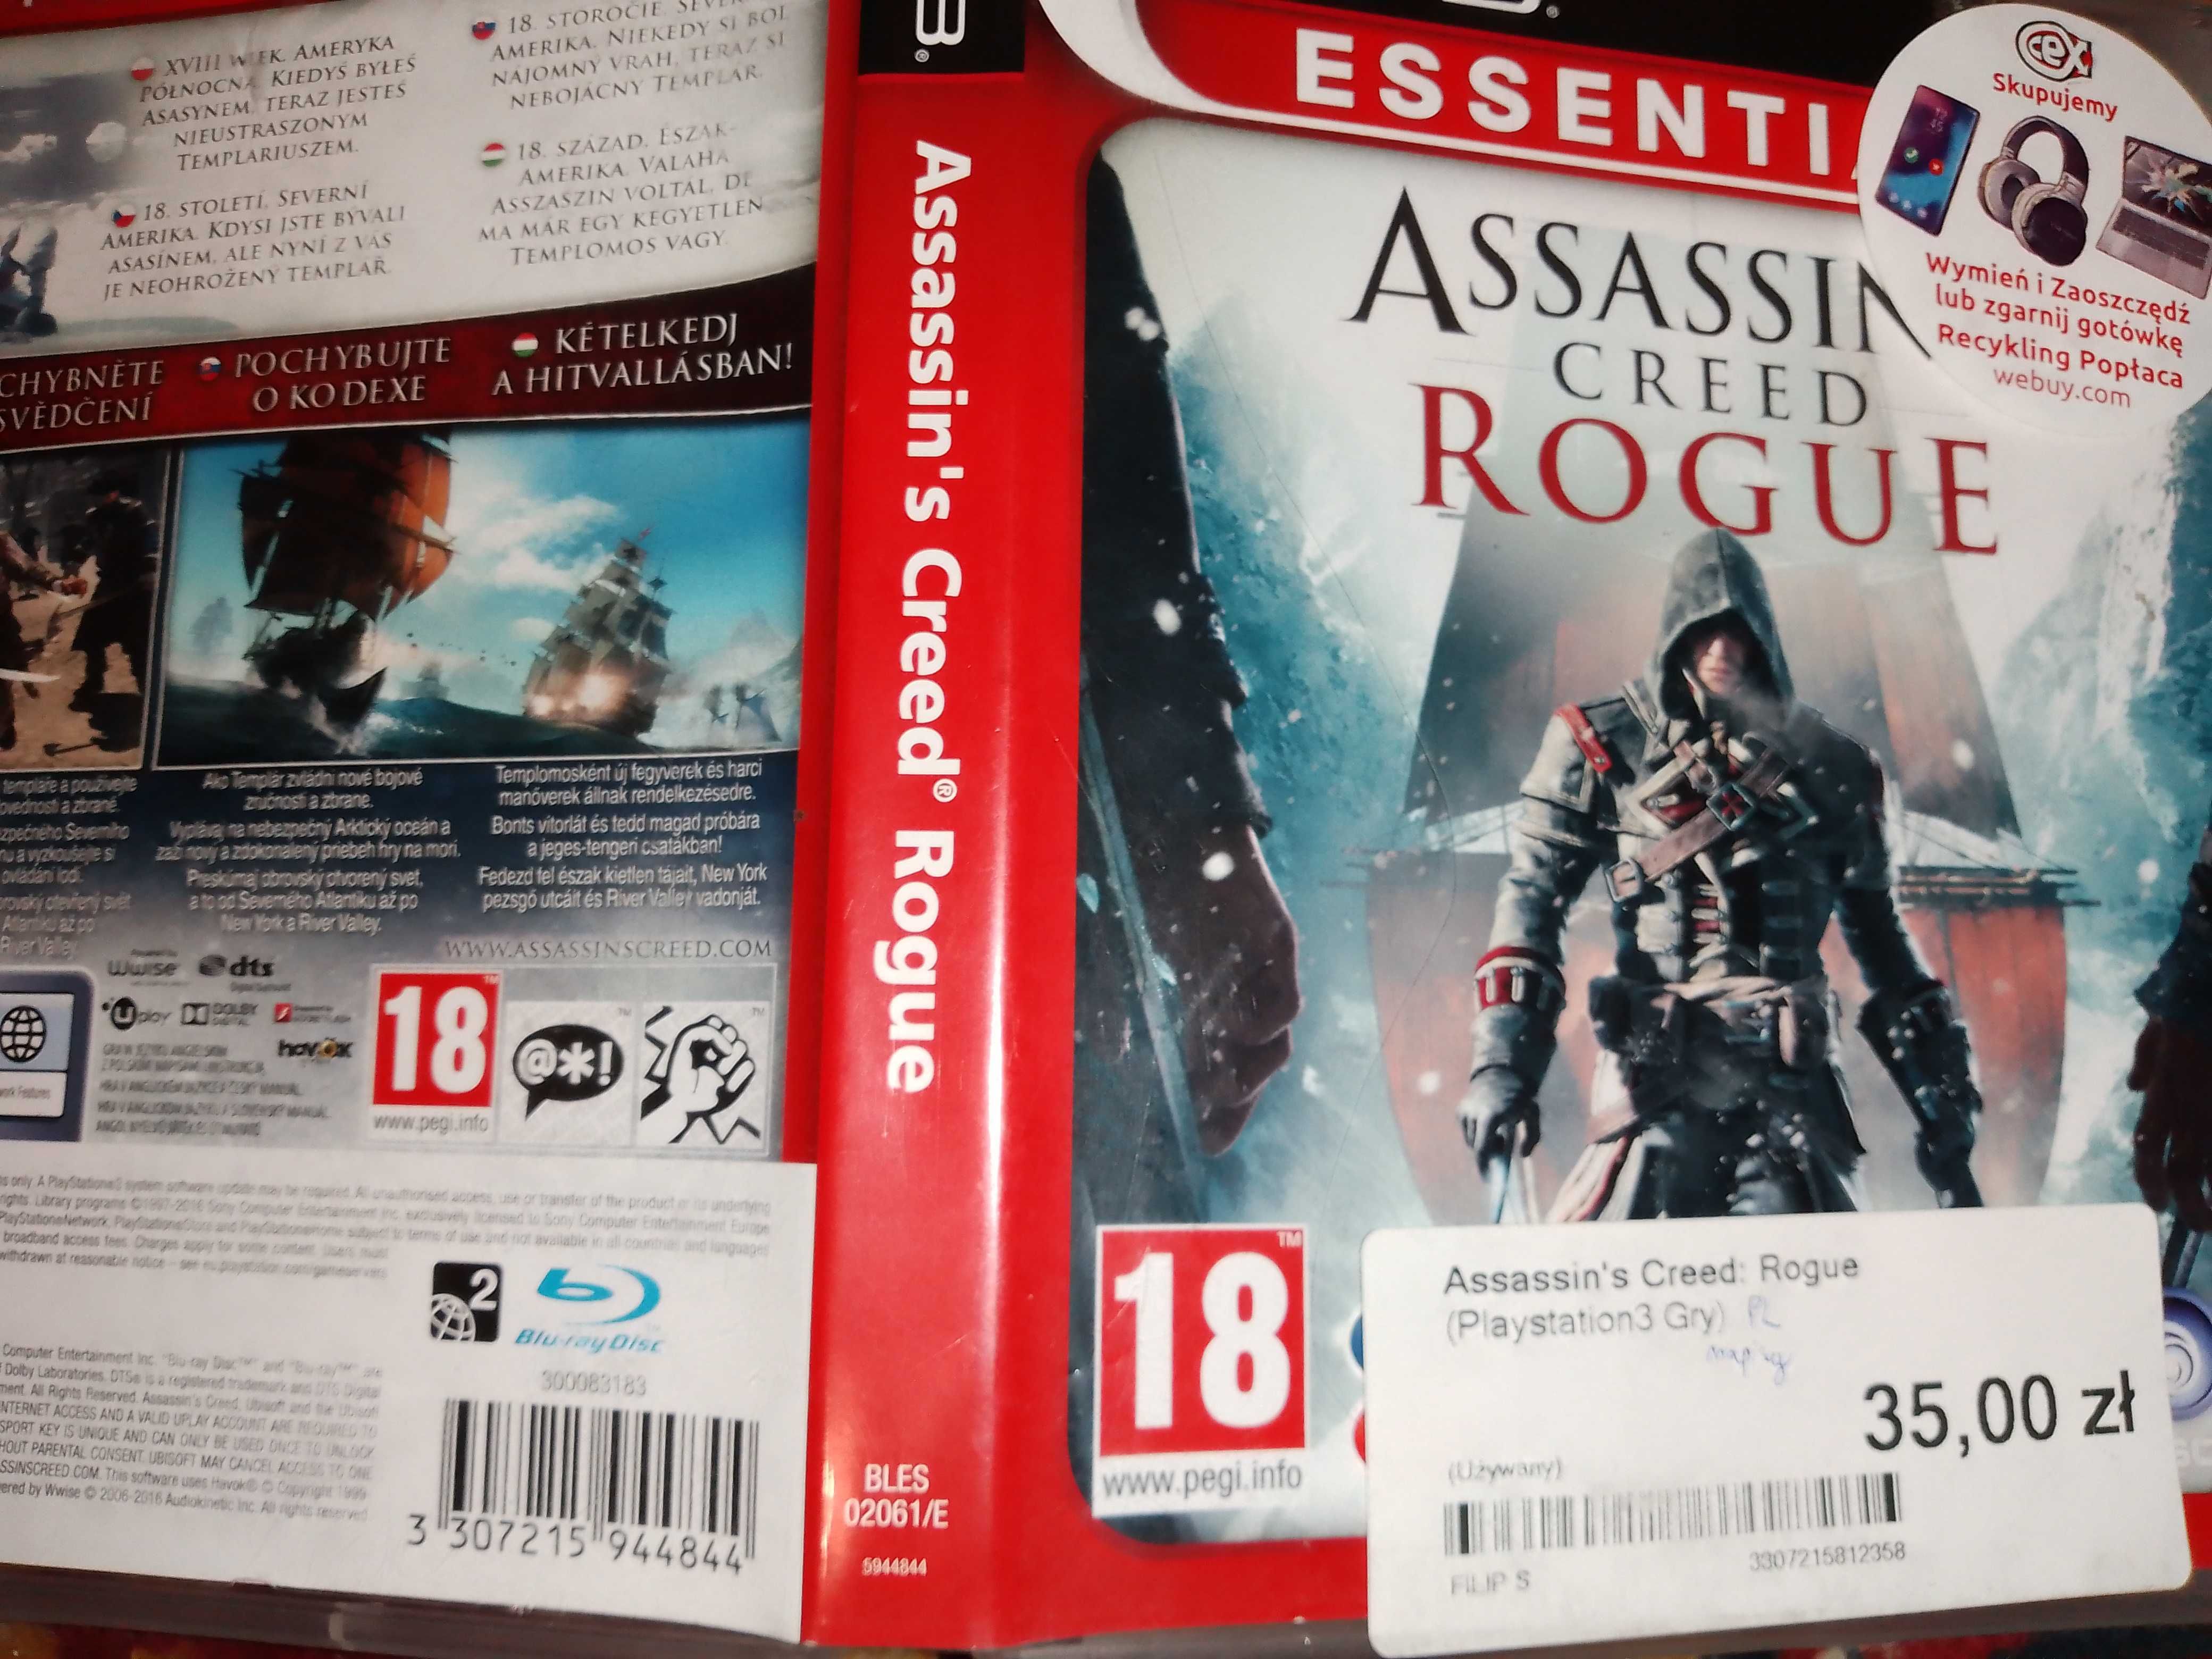 + Assassin's Creed Rogue PL + gra na PS3 polska wersja asasyn